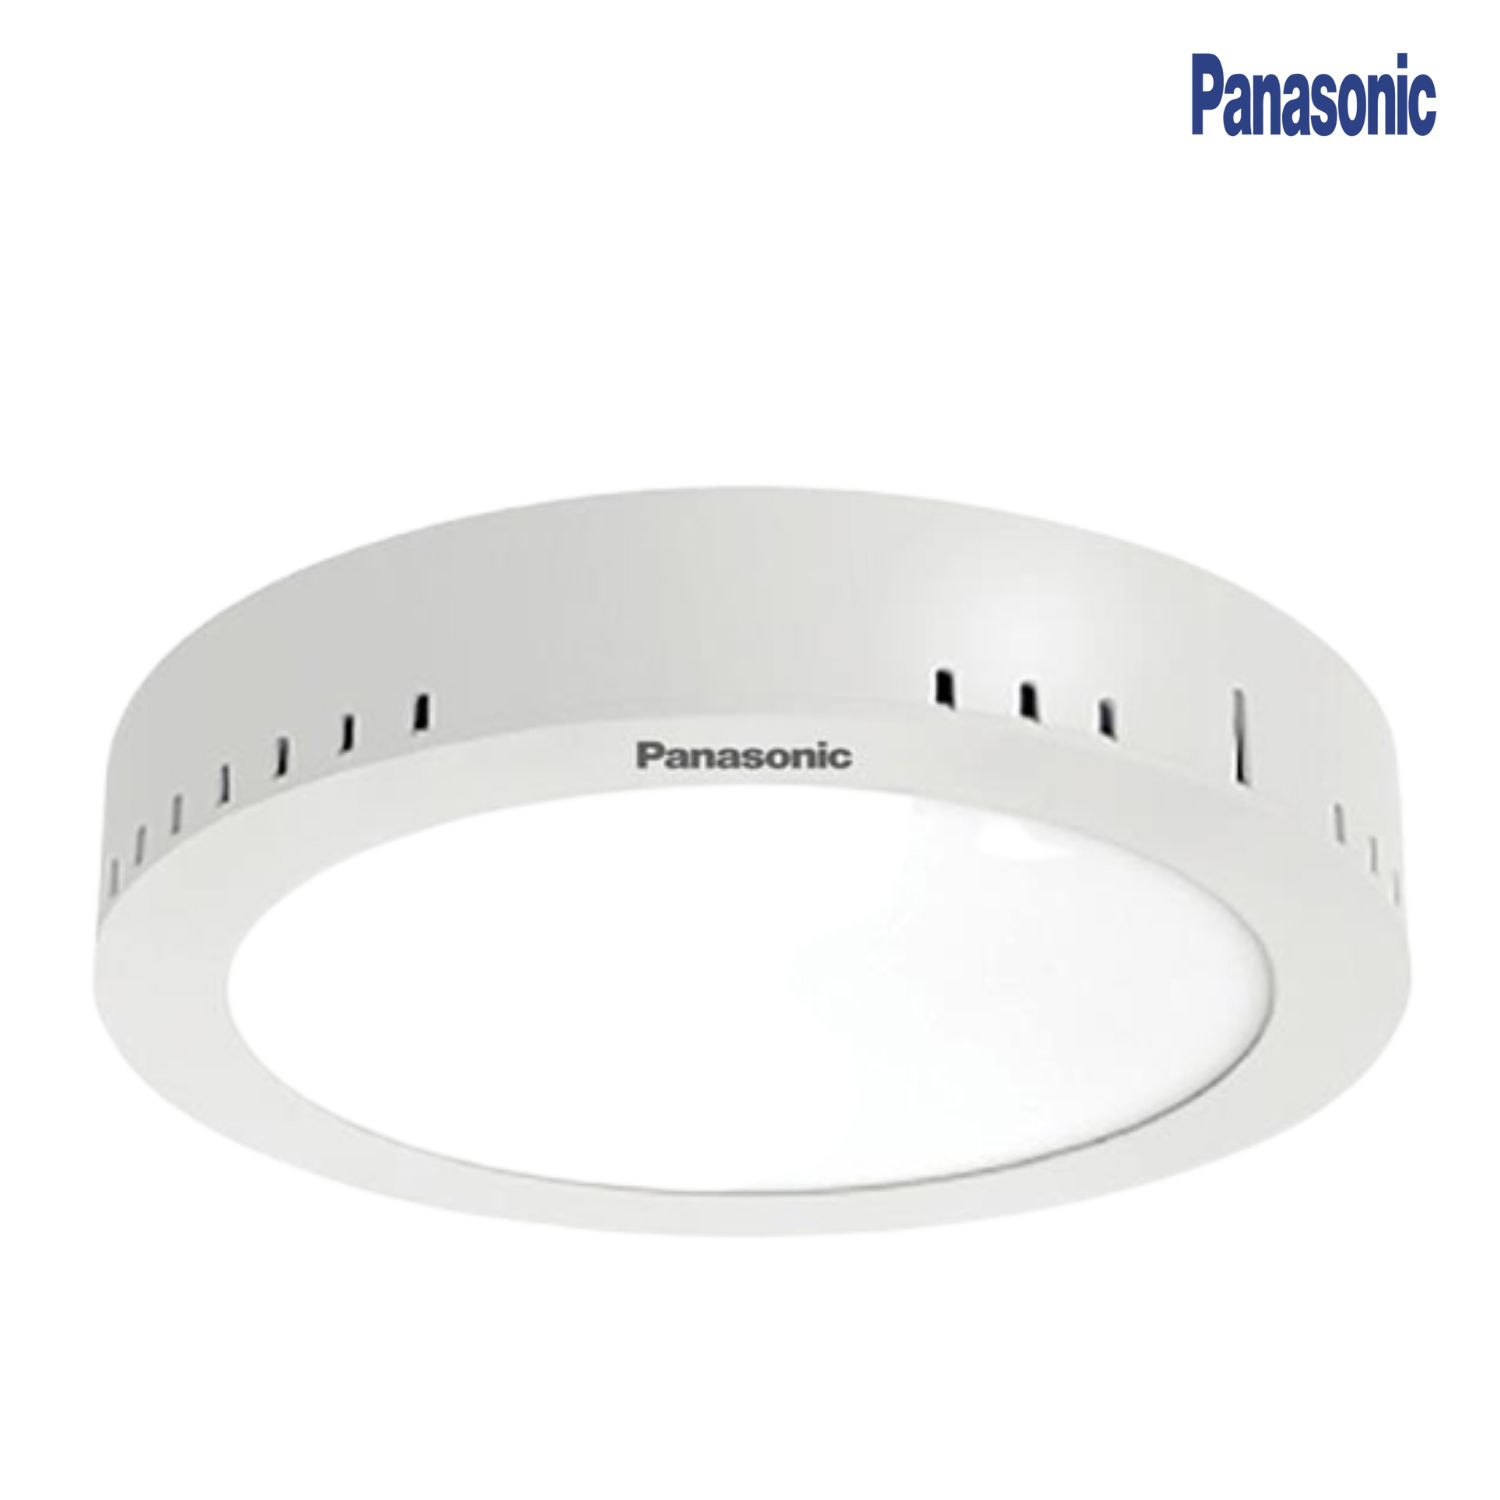 Panasonic - Đèn LED Ốp Trần Nổi Tròn 6W Outbow | NNNC7632088 / NNNC7633088 / NNNC7637088